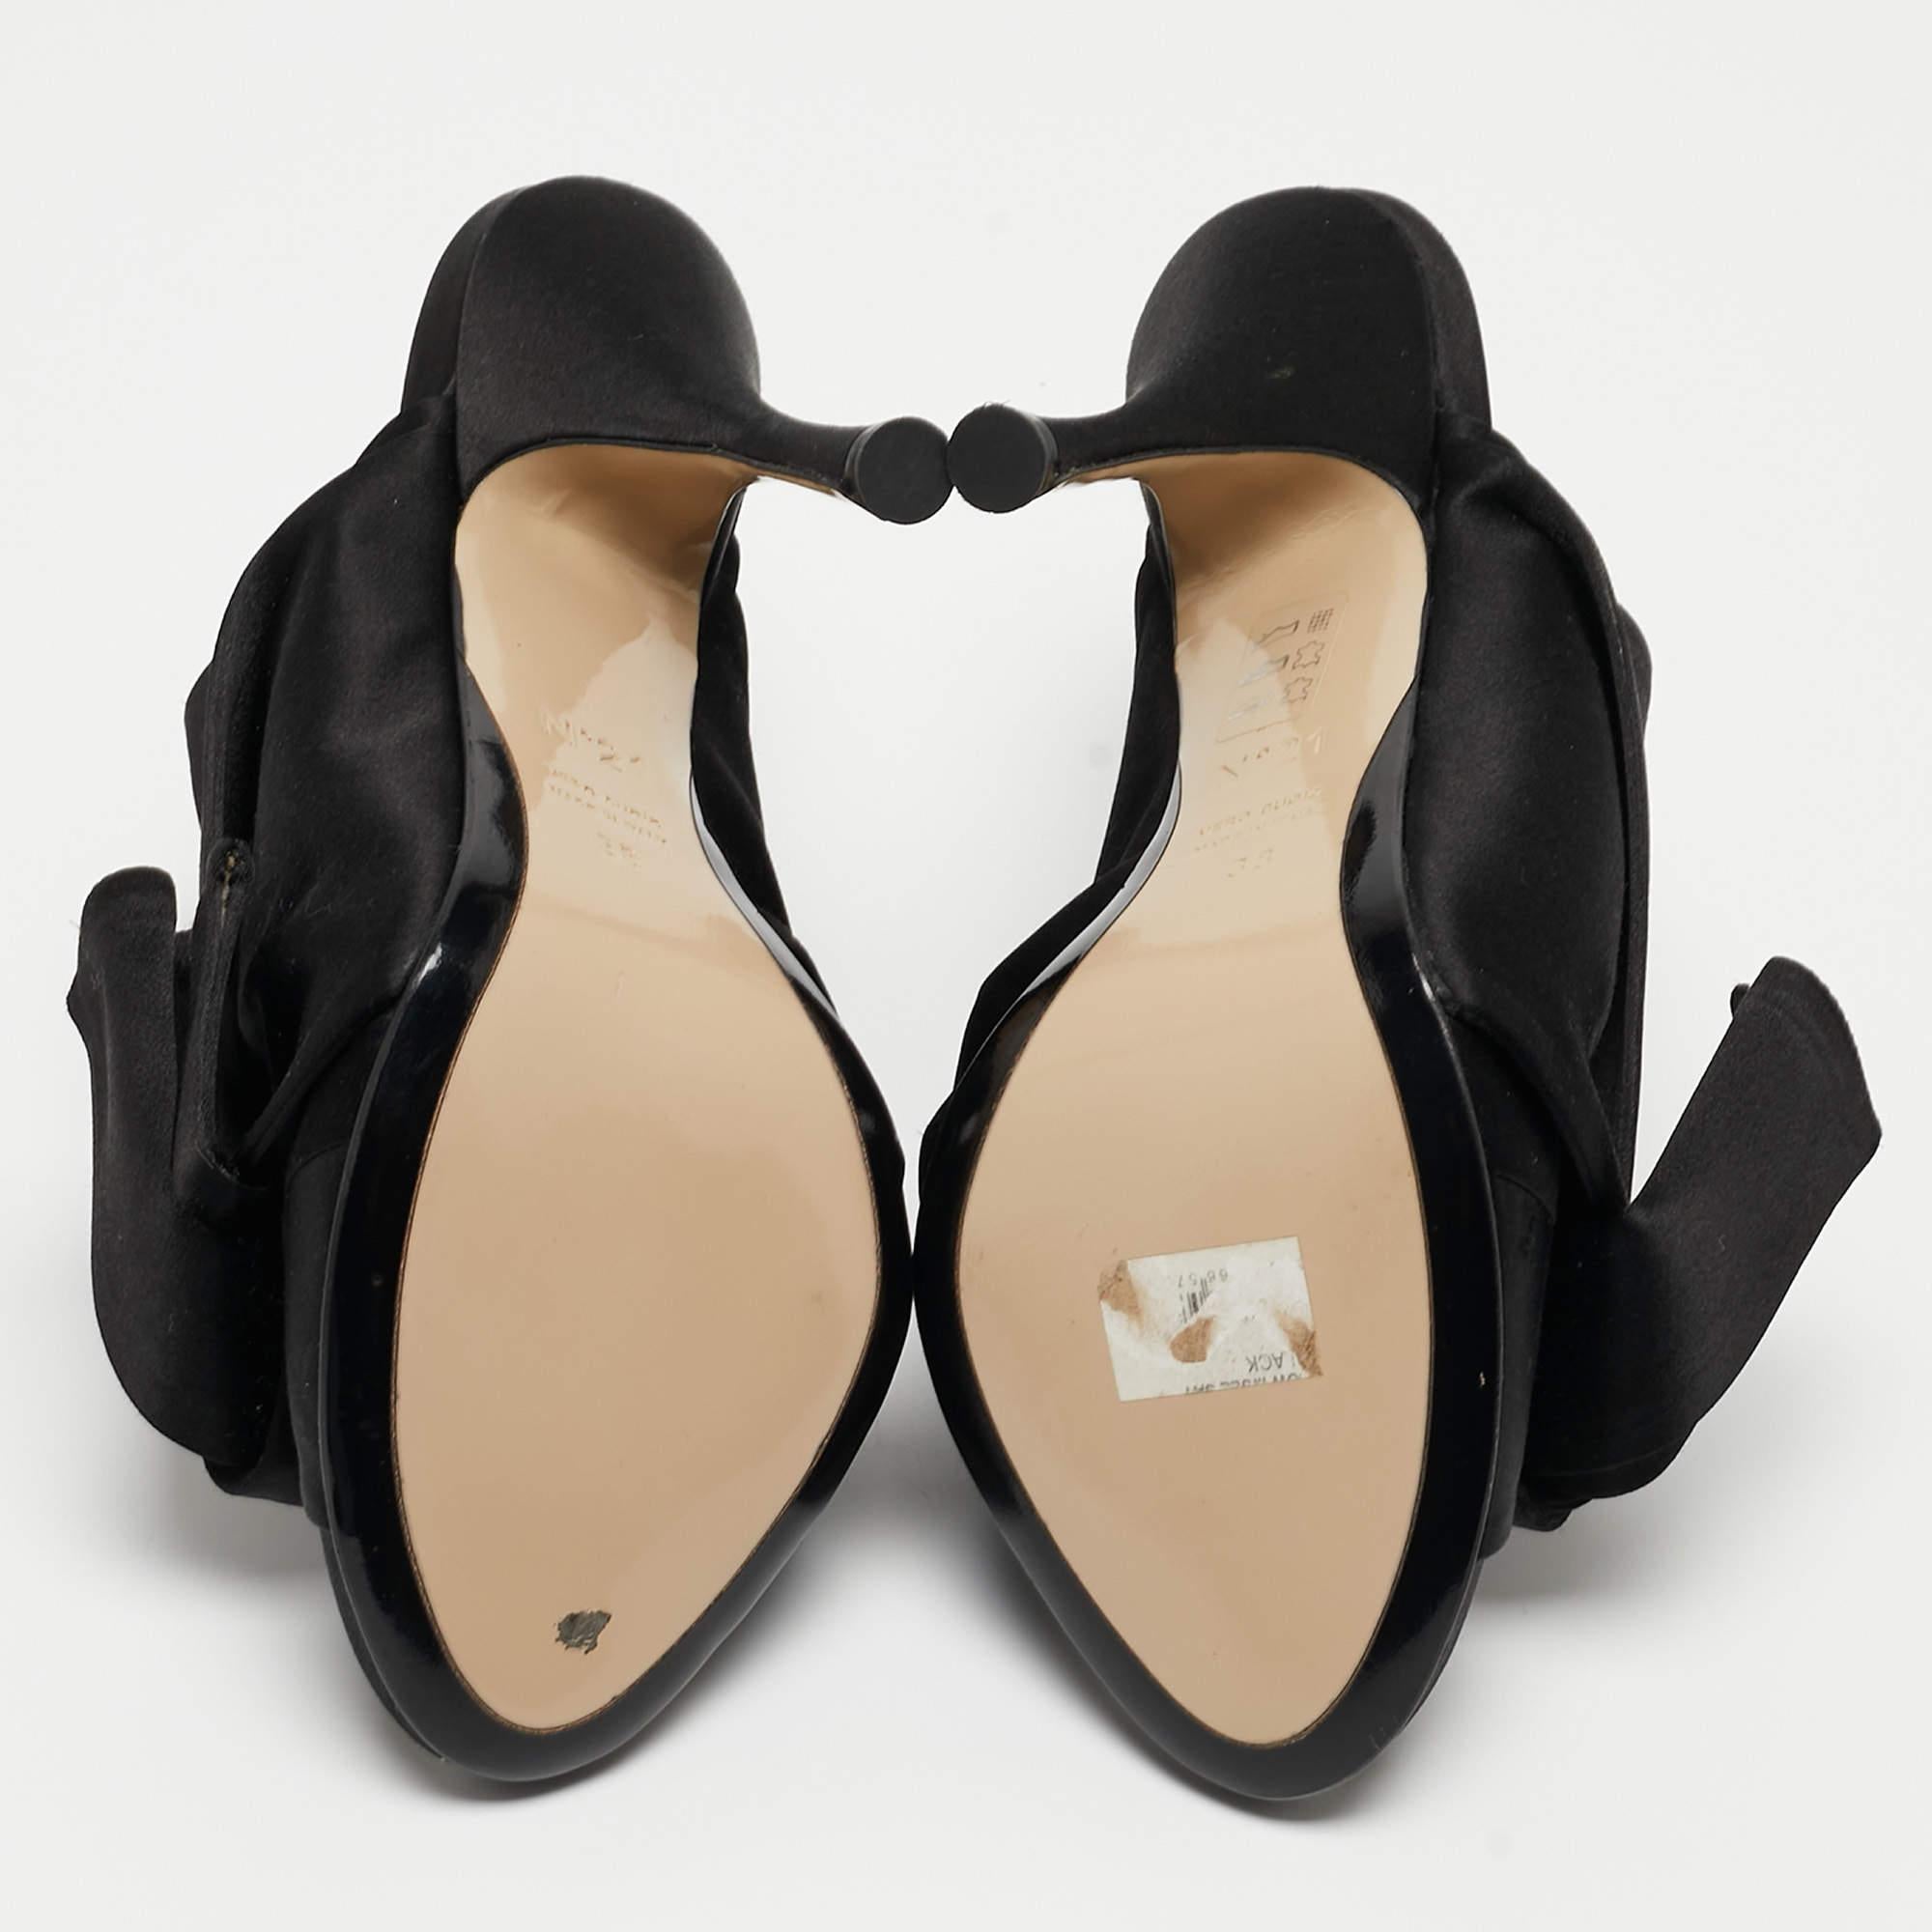 N21 Black Satin Knot Pointed Toe Slide Sandals Size 38 For Sale 3